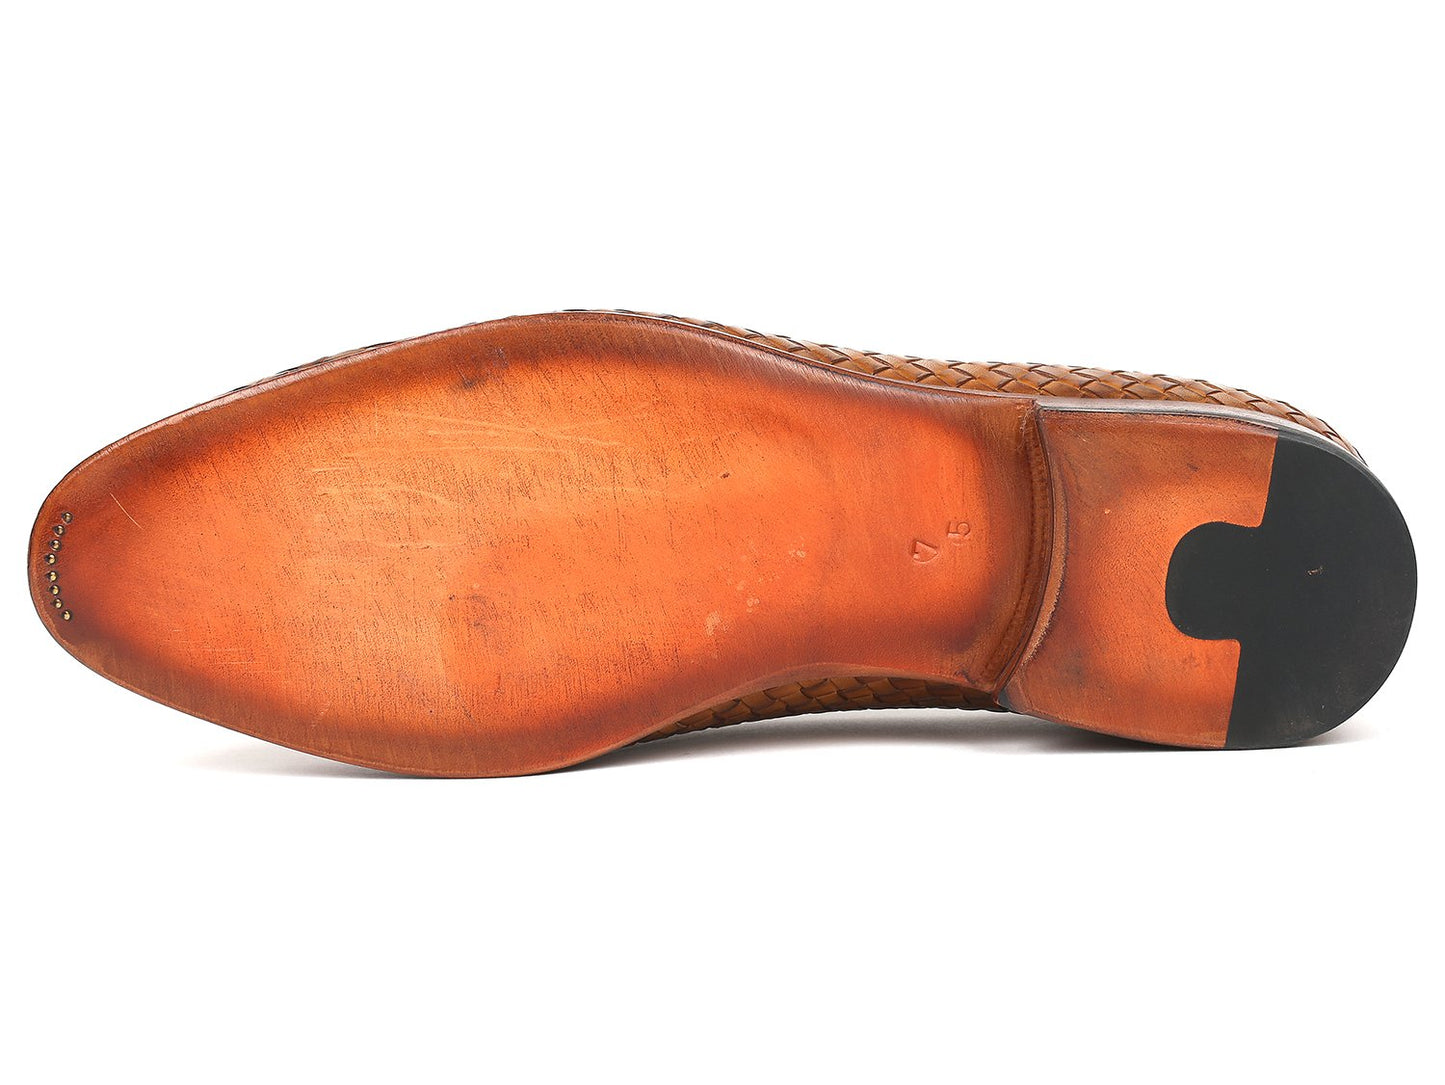 Paul Parkman Woven Leather Tassel Loafers Camel Colour  (ID#WVN44-CML)